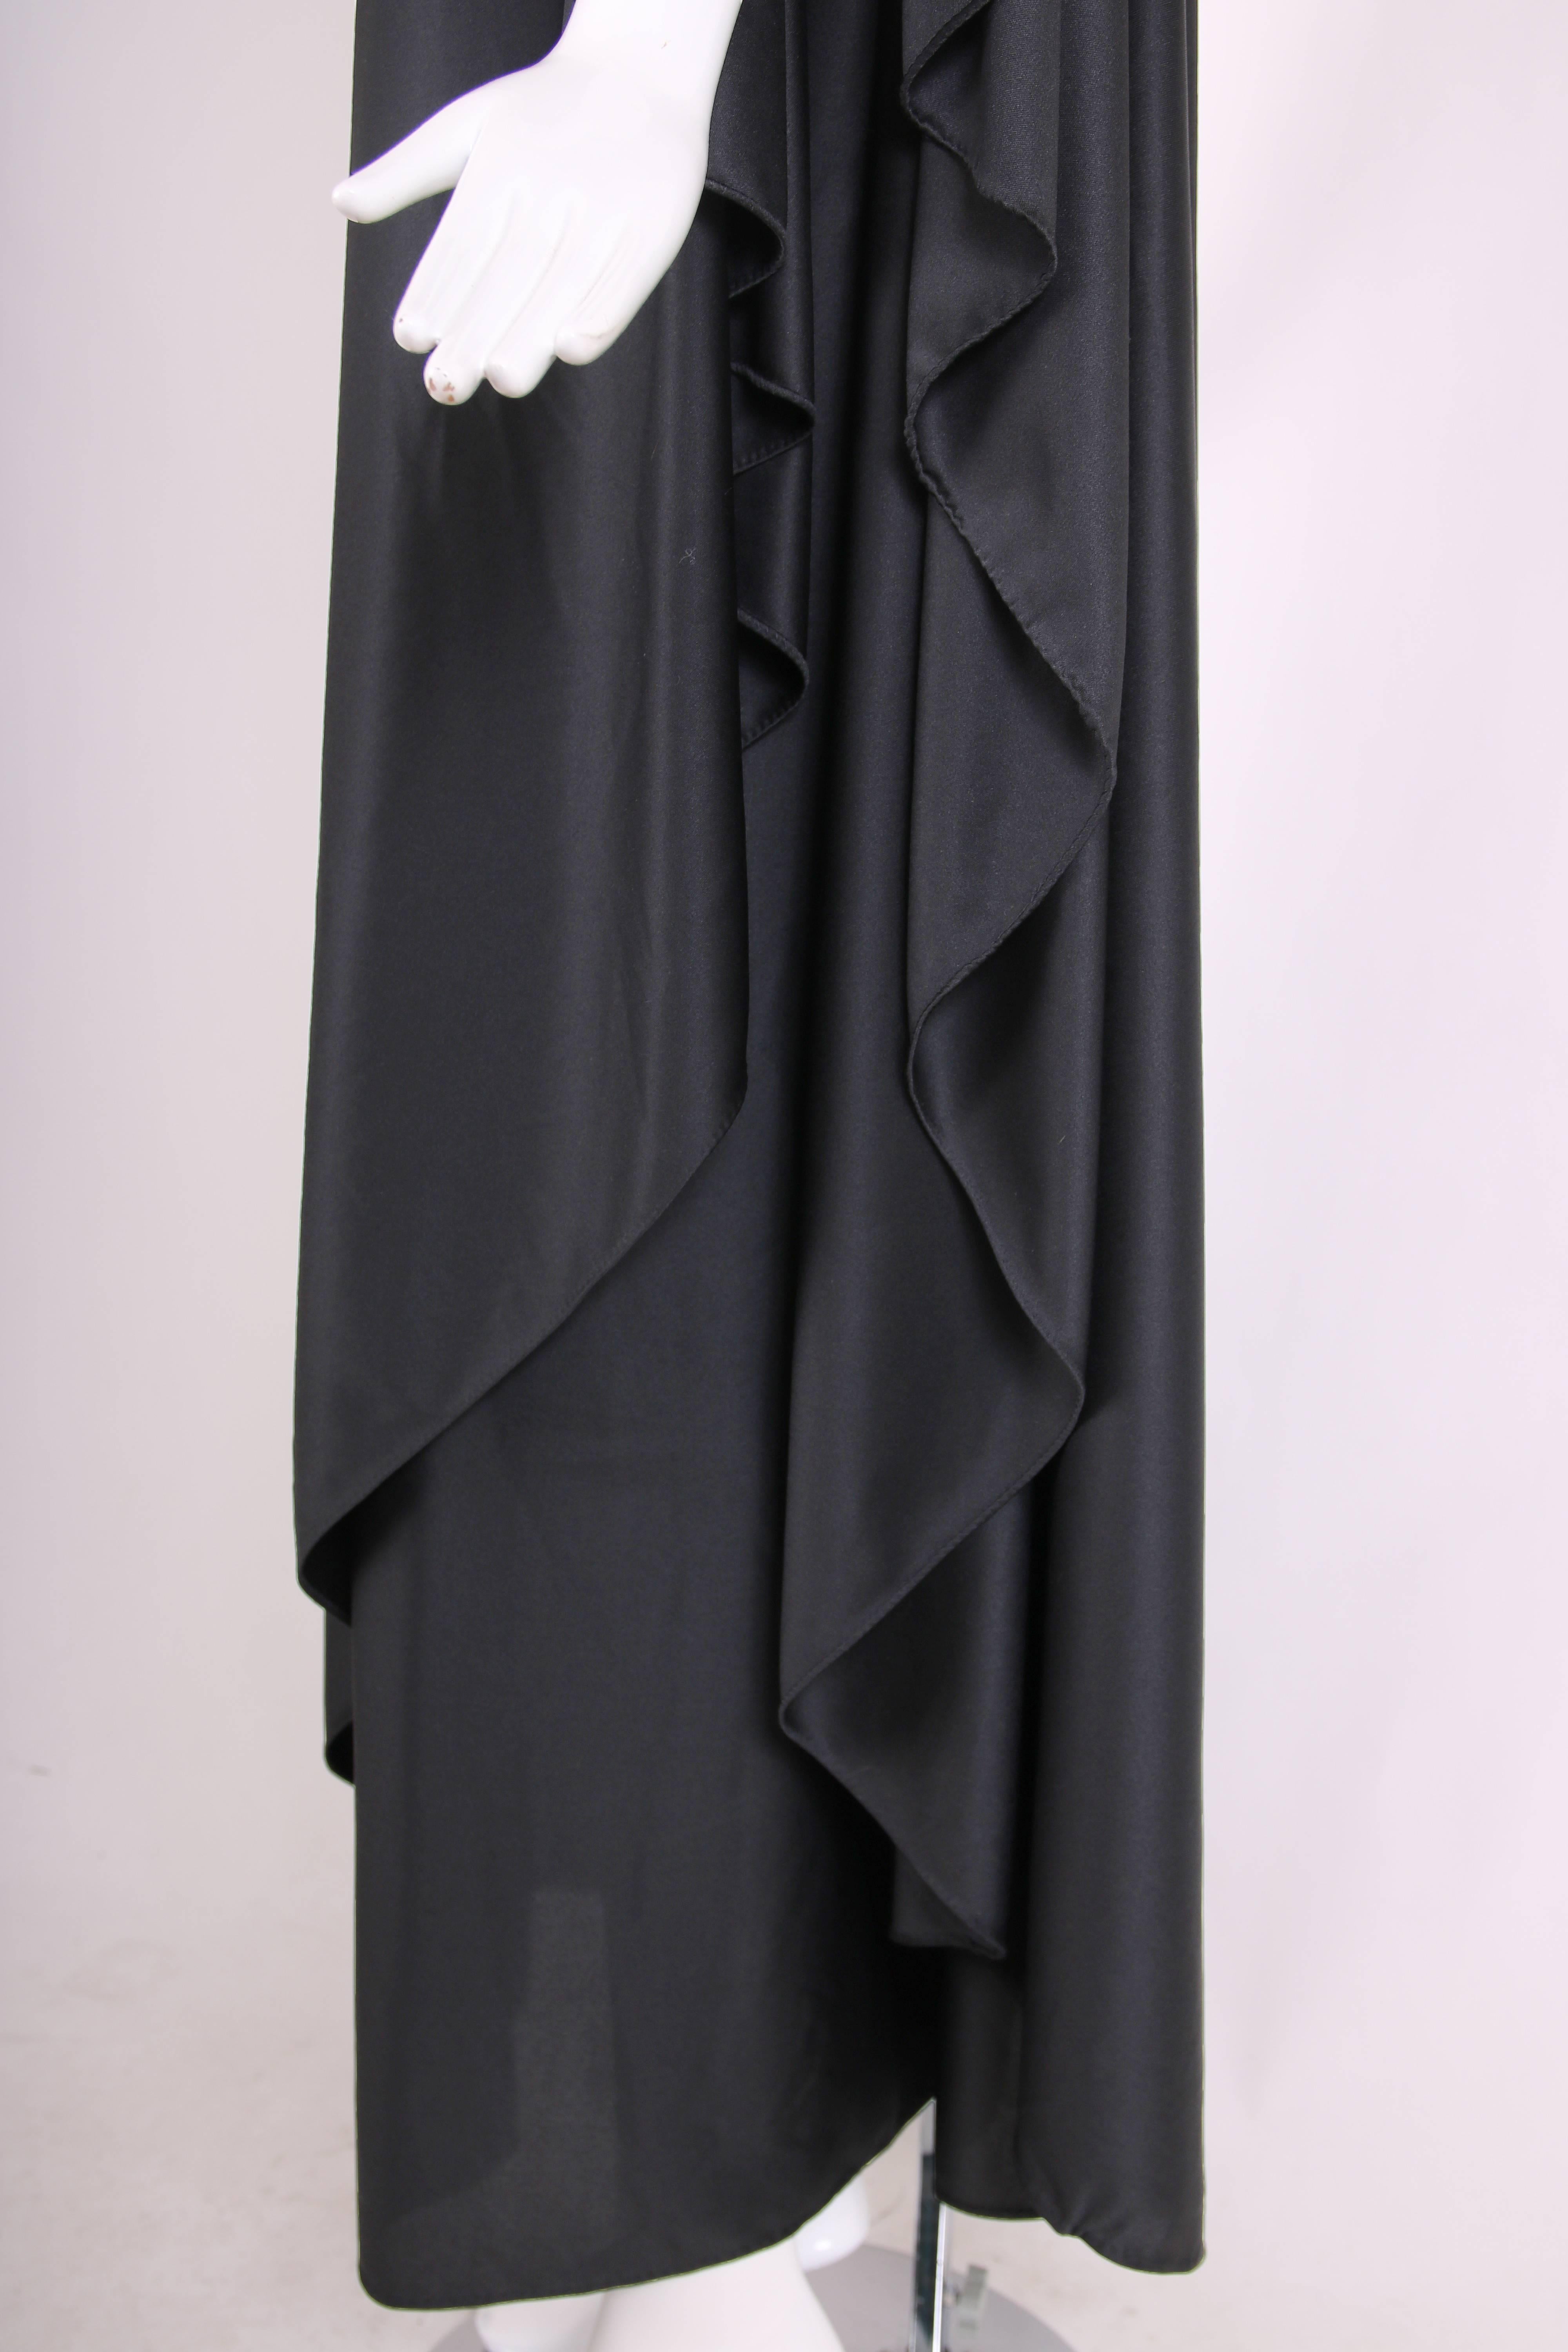 1979 Halston Black Single Shoulder Draped Dorian Gown Dress 2